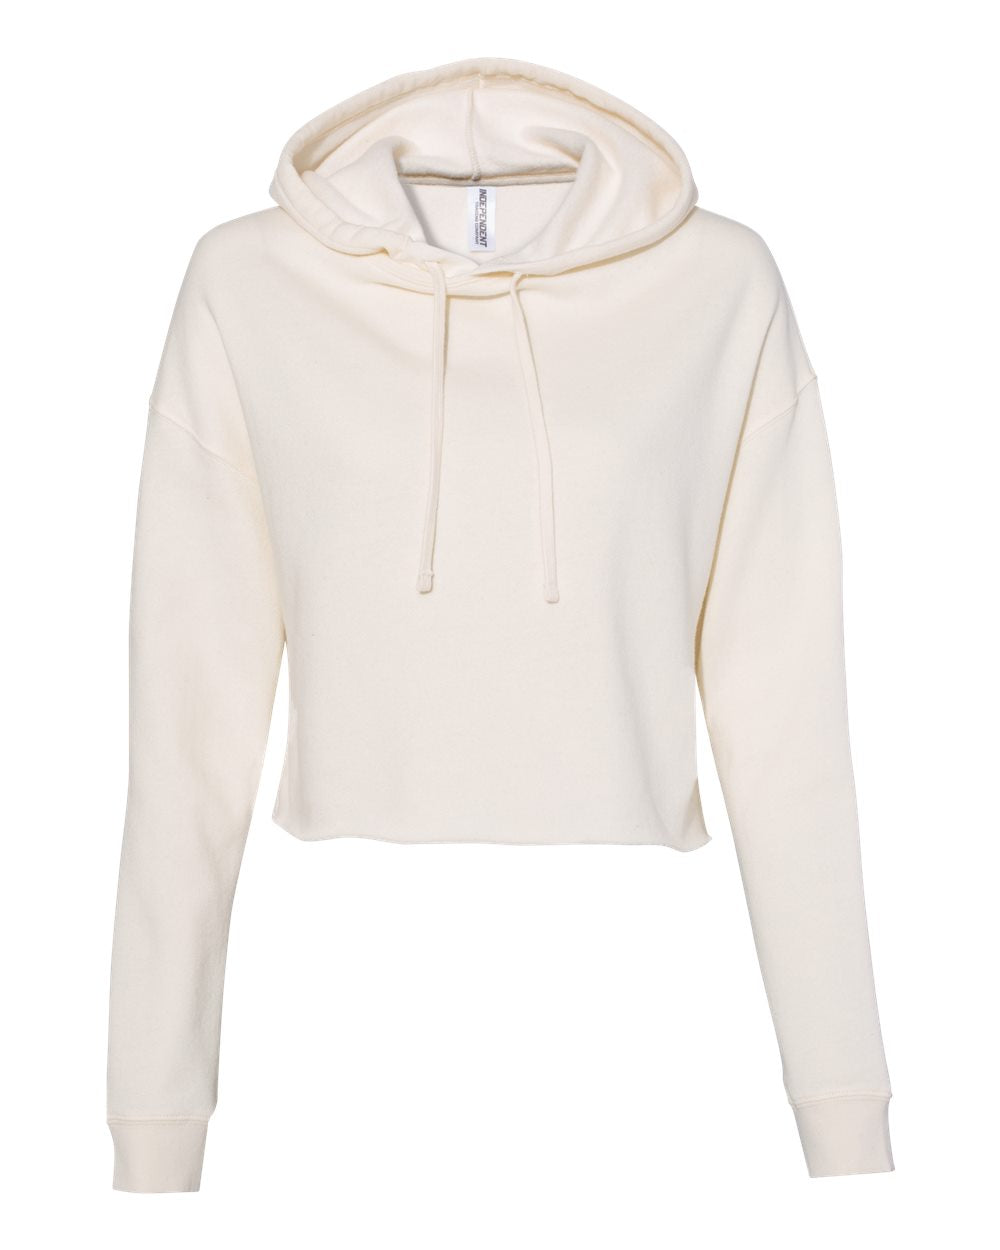 Lightweight Crop Hooded Ladies Sweatshirt - Independent Trading Co. AFX64CRP